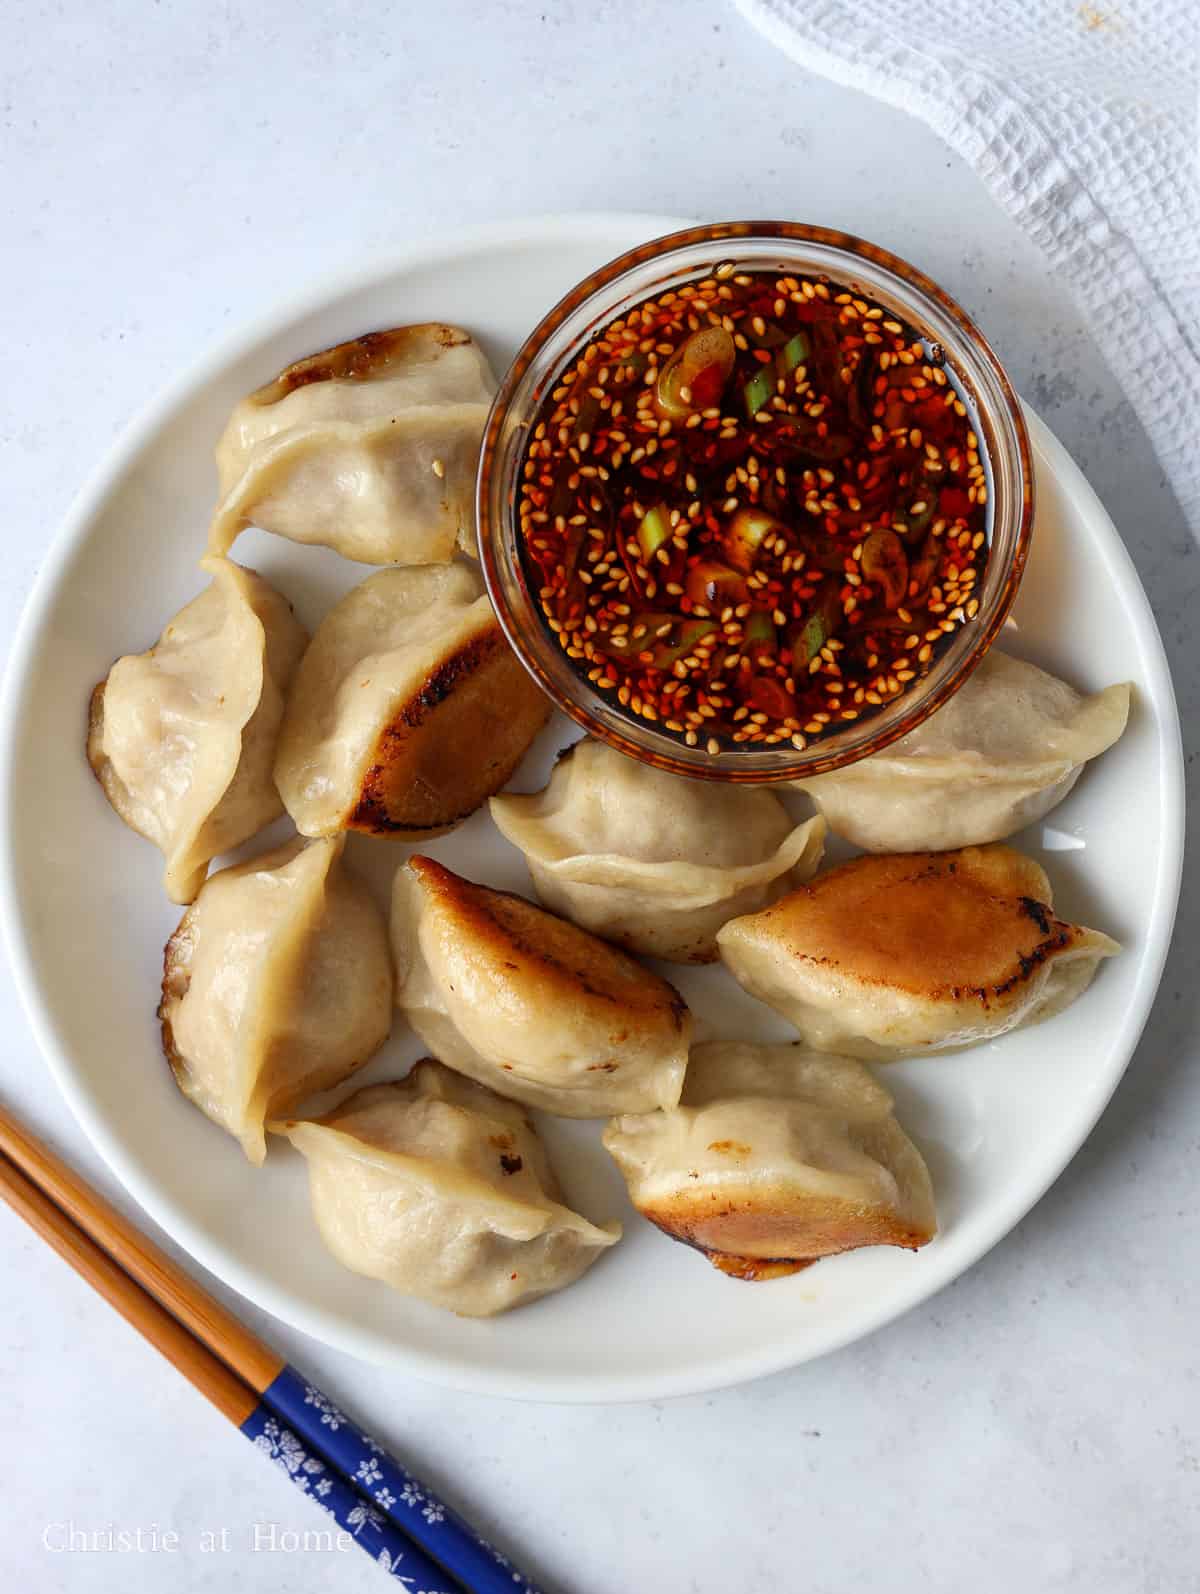 shot of dumplings with sauce